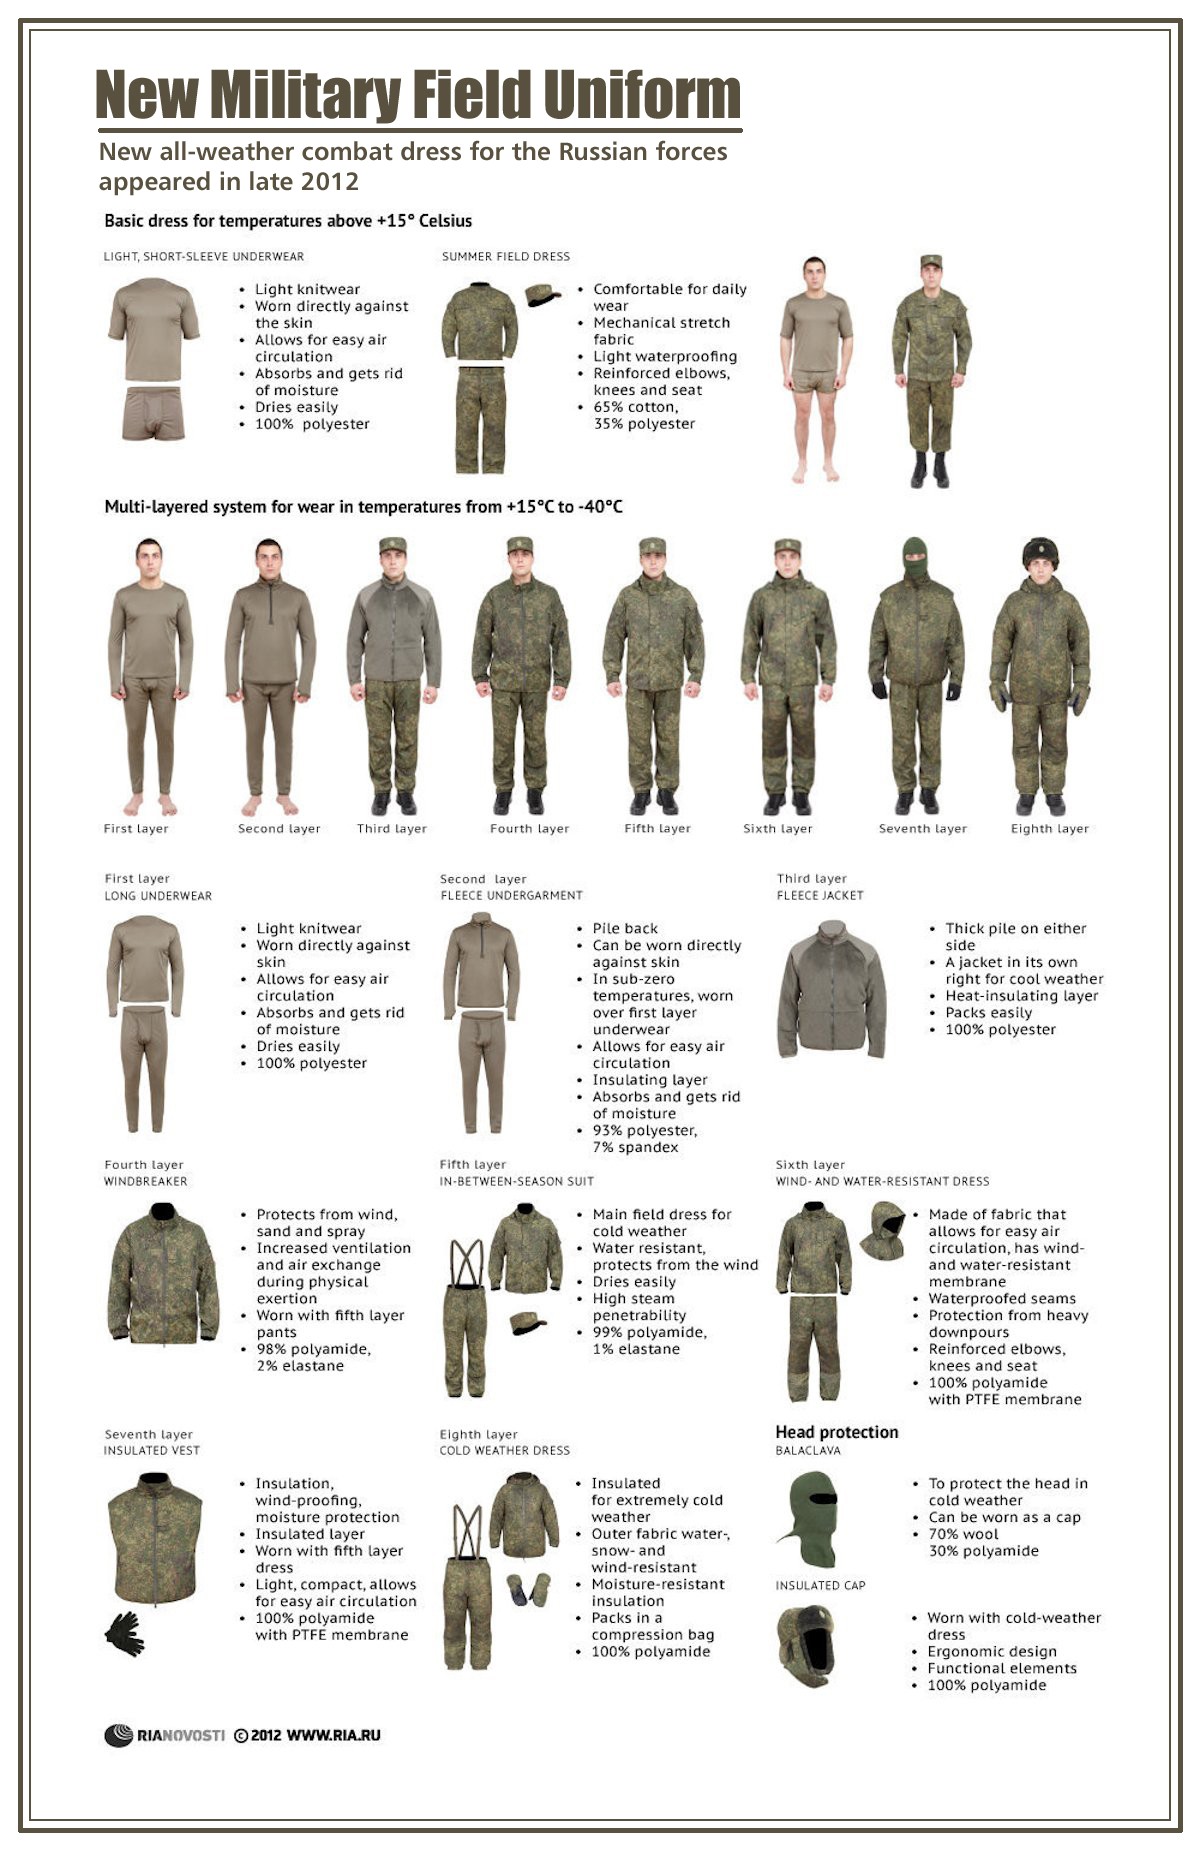 00-ria-novosti-infographics-new-military-field-uniform-2012.jpg